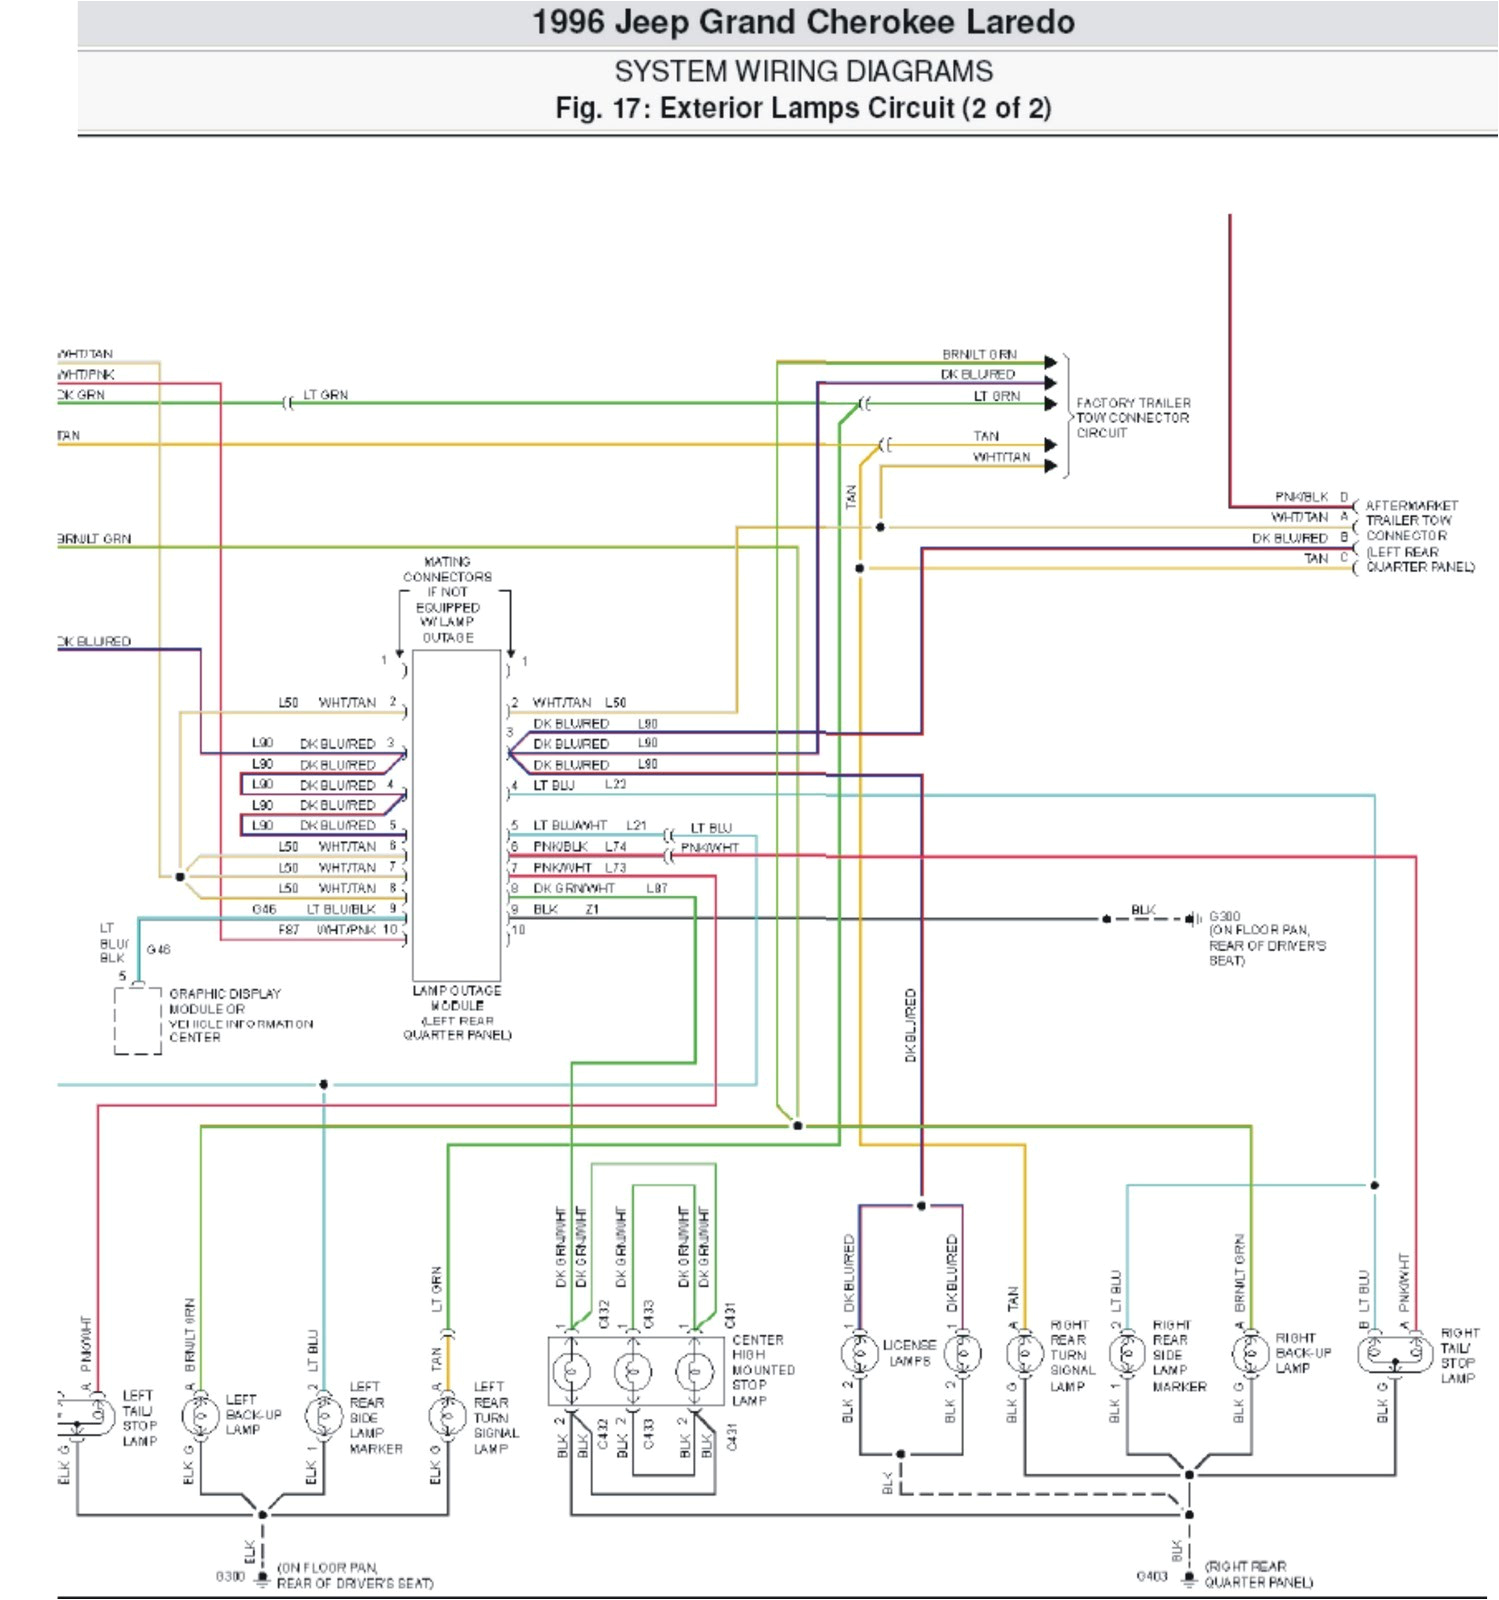 2014 jeep wrangler radio wiring diagram new 2003 jeep wrangler radio wiring harness adapter diagram software mac of 2014 jeep wrangler radio wiring diagram jpg